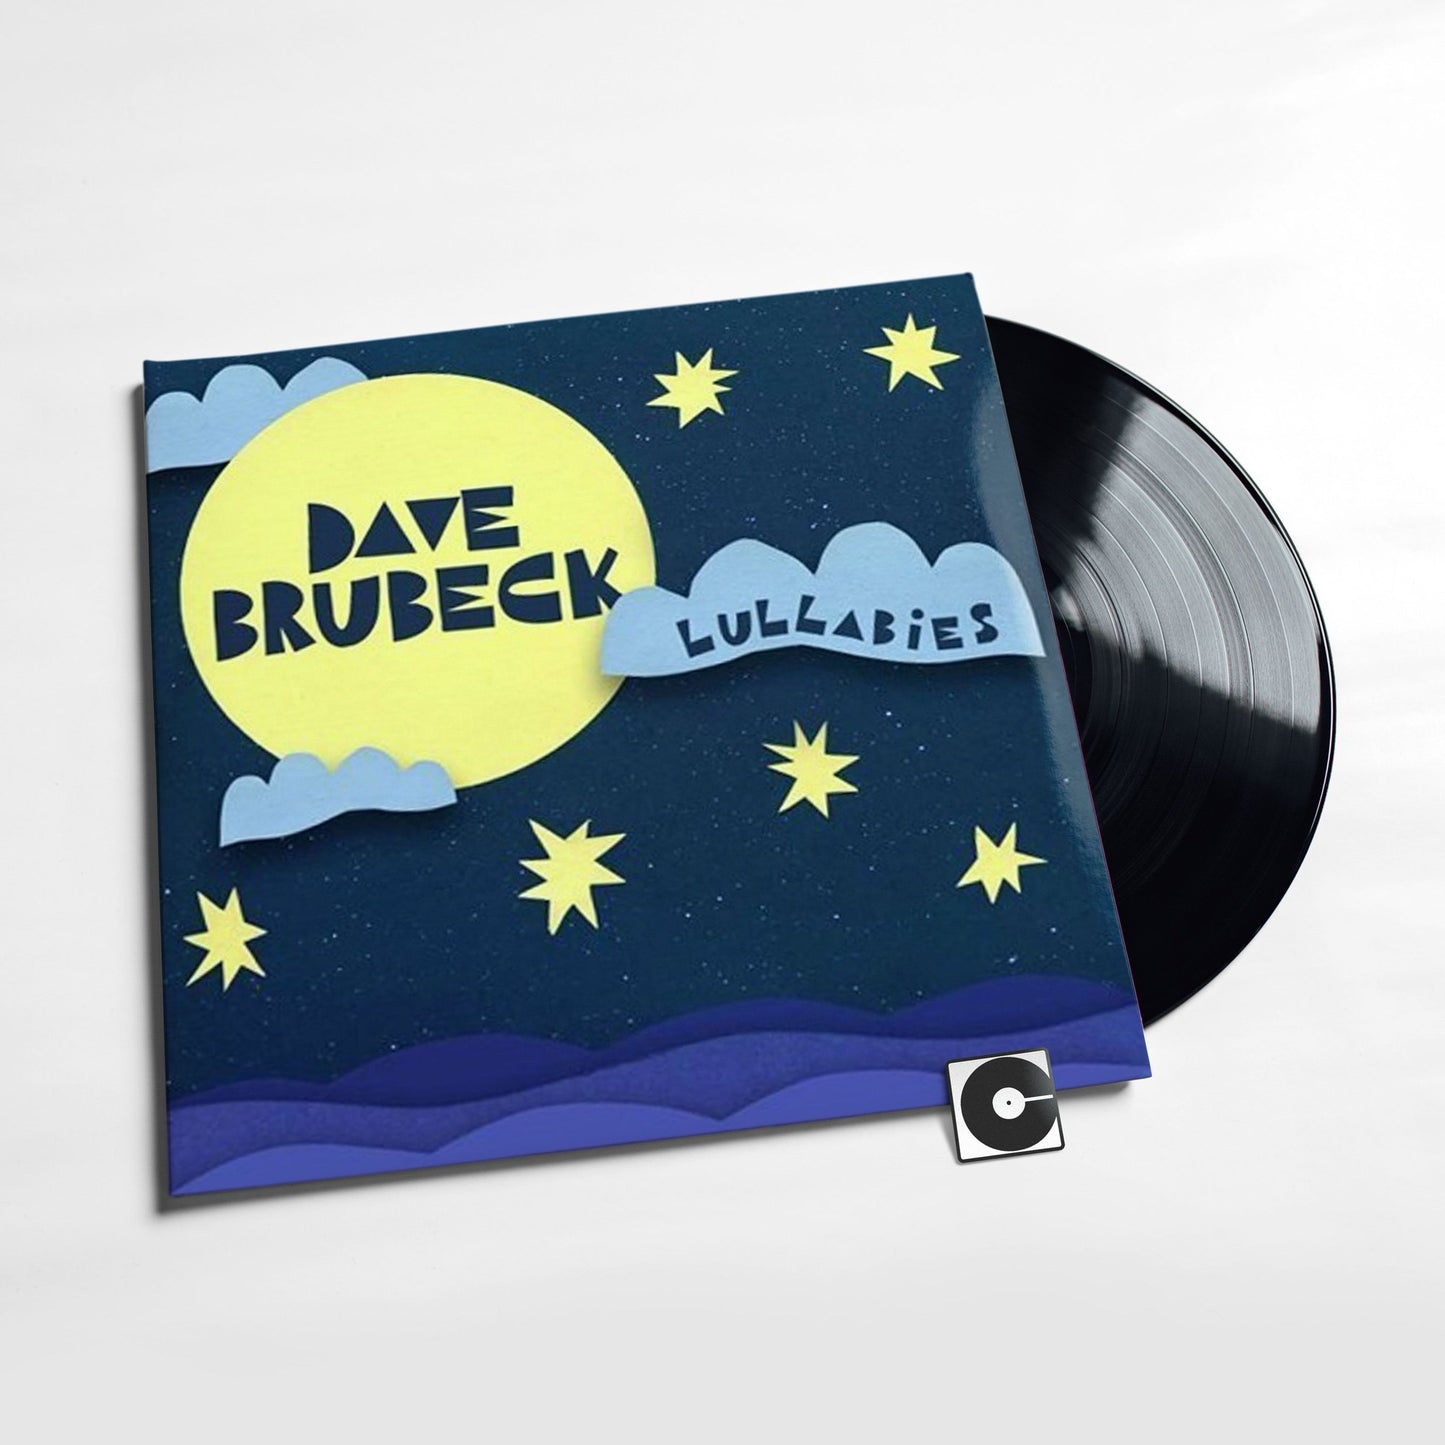 Dave Brubeck - "Lullabies"